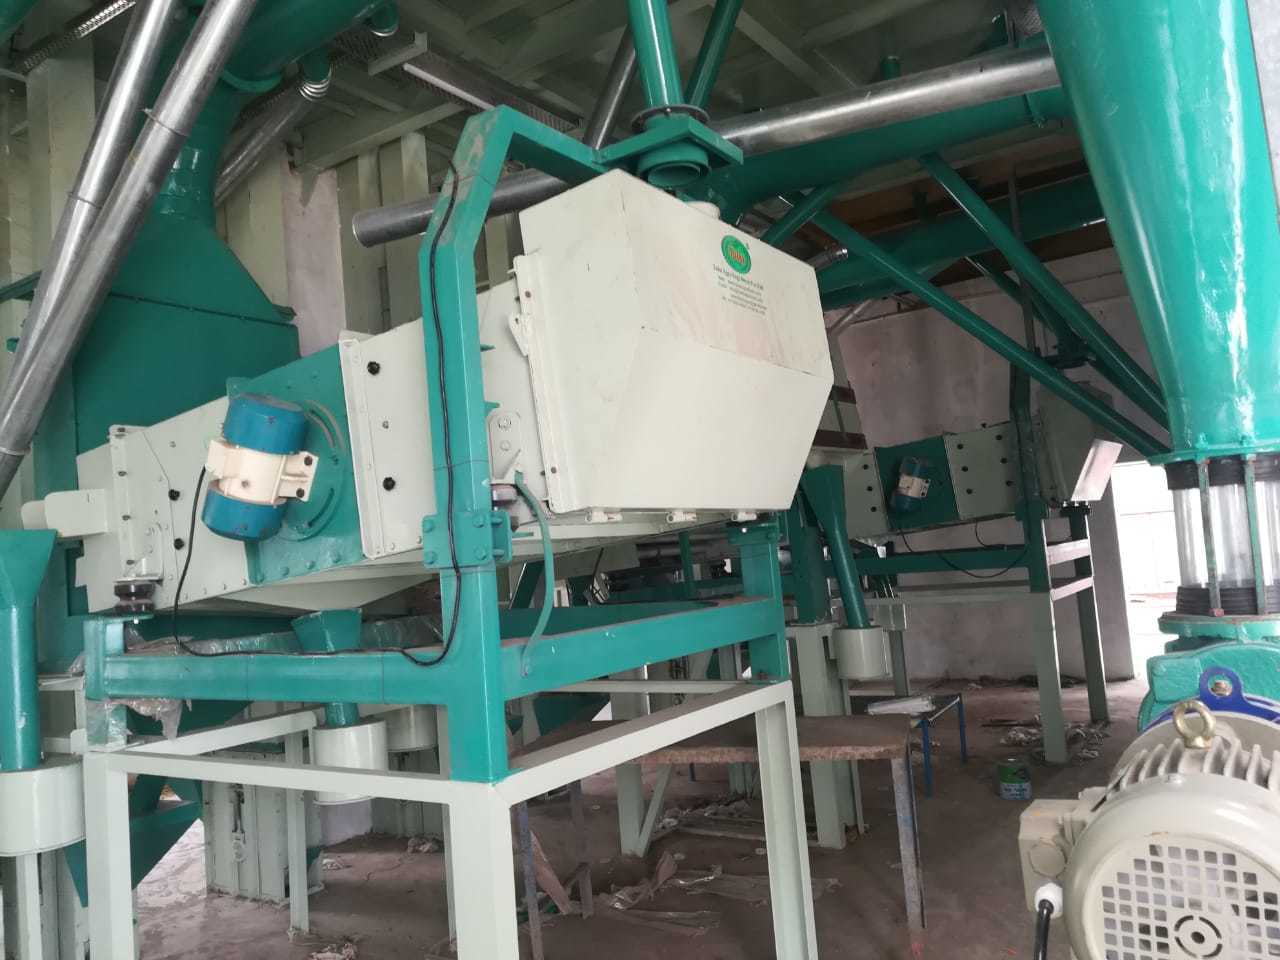 Industrial Maida Flour Mill Plant